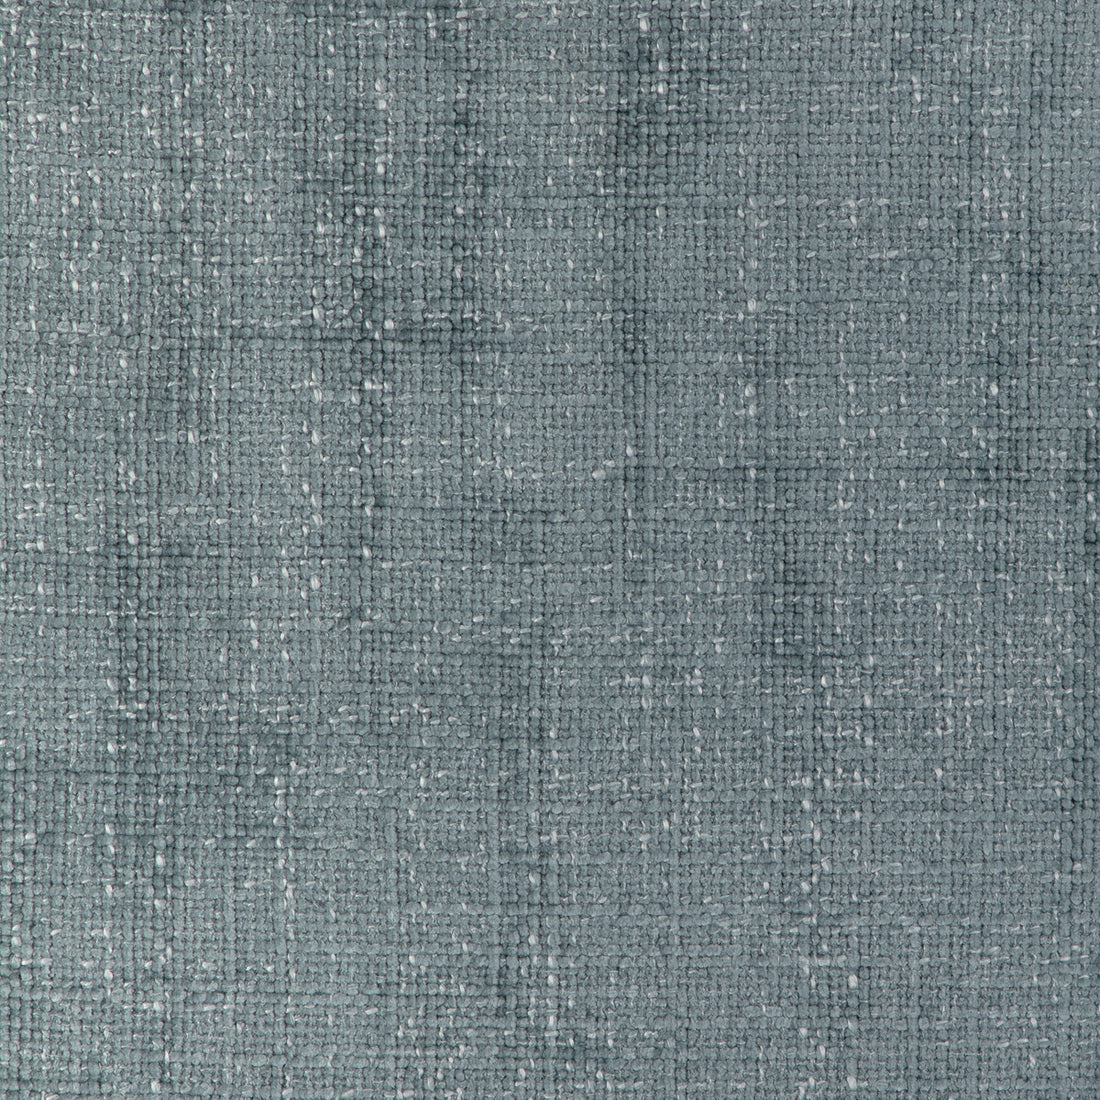 Kravet Smart fabric in 36677-511 color - pattern 36677.511.0 - by Kravet Smart in the Performance Kravetarmor collection